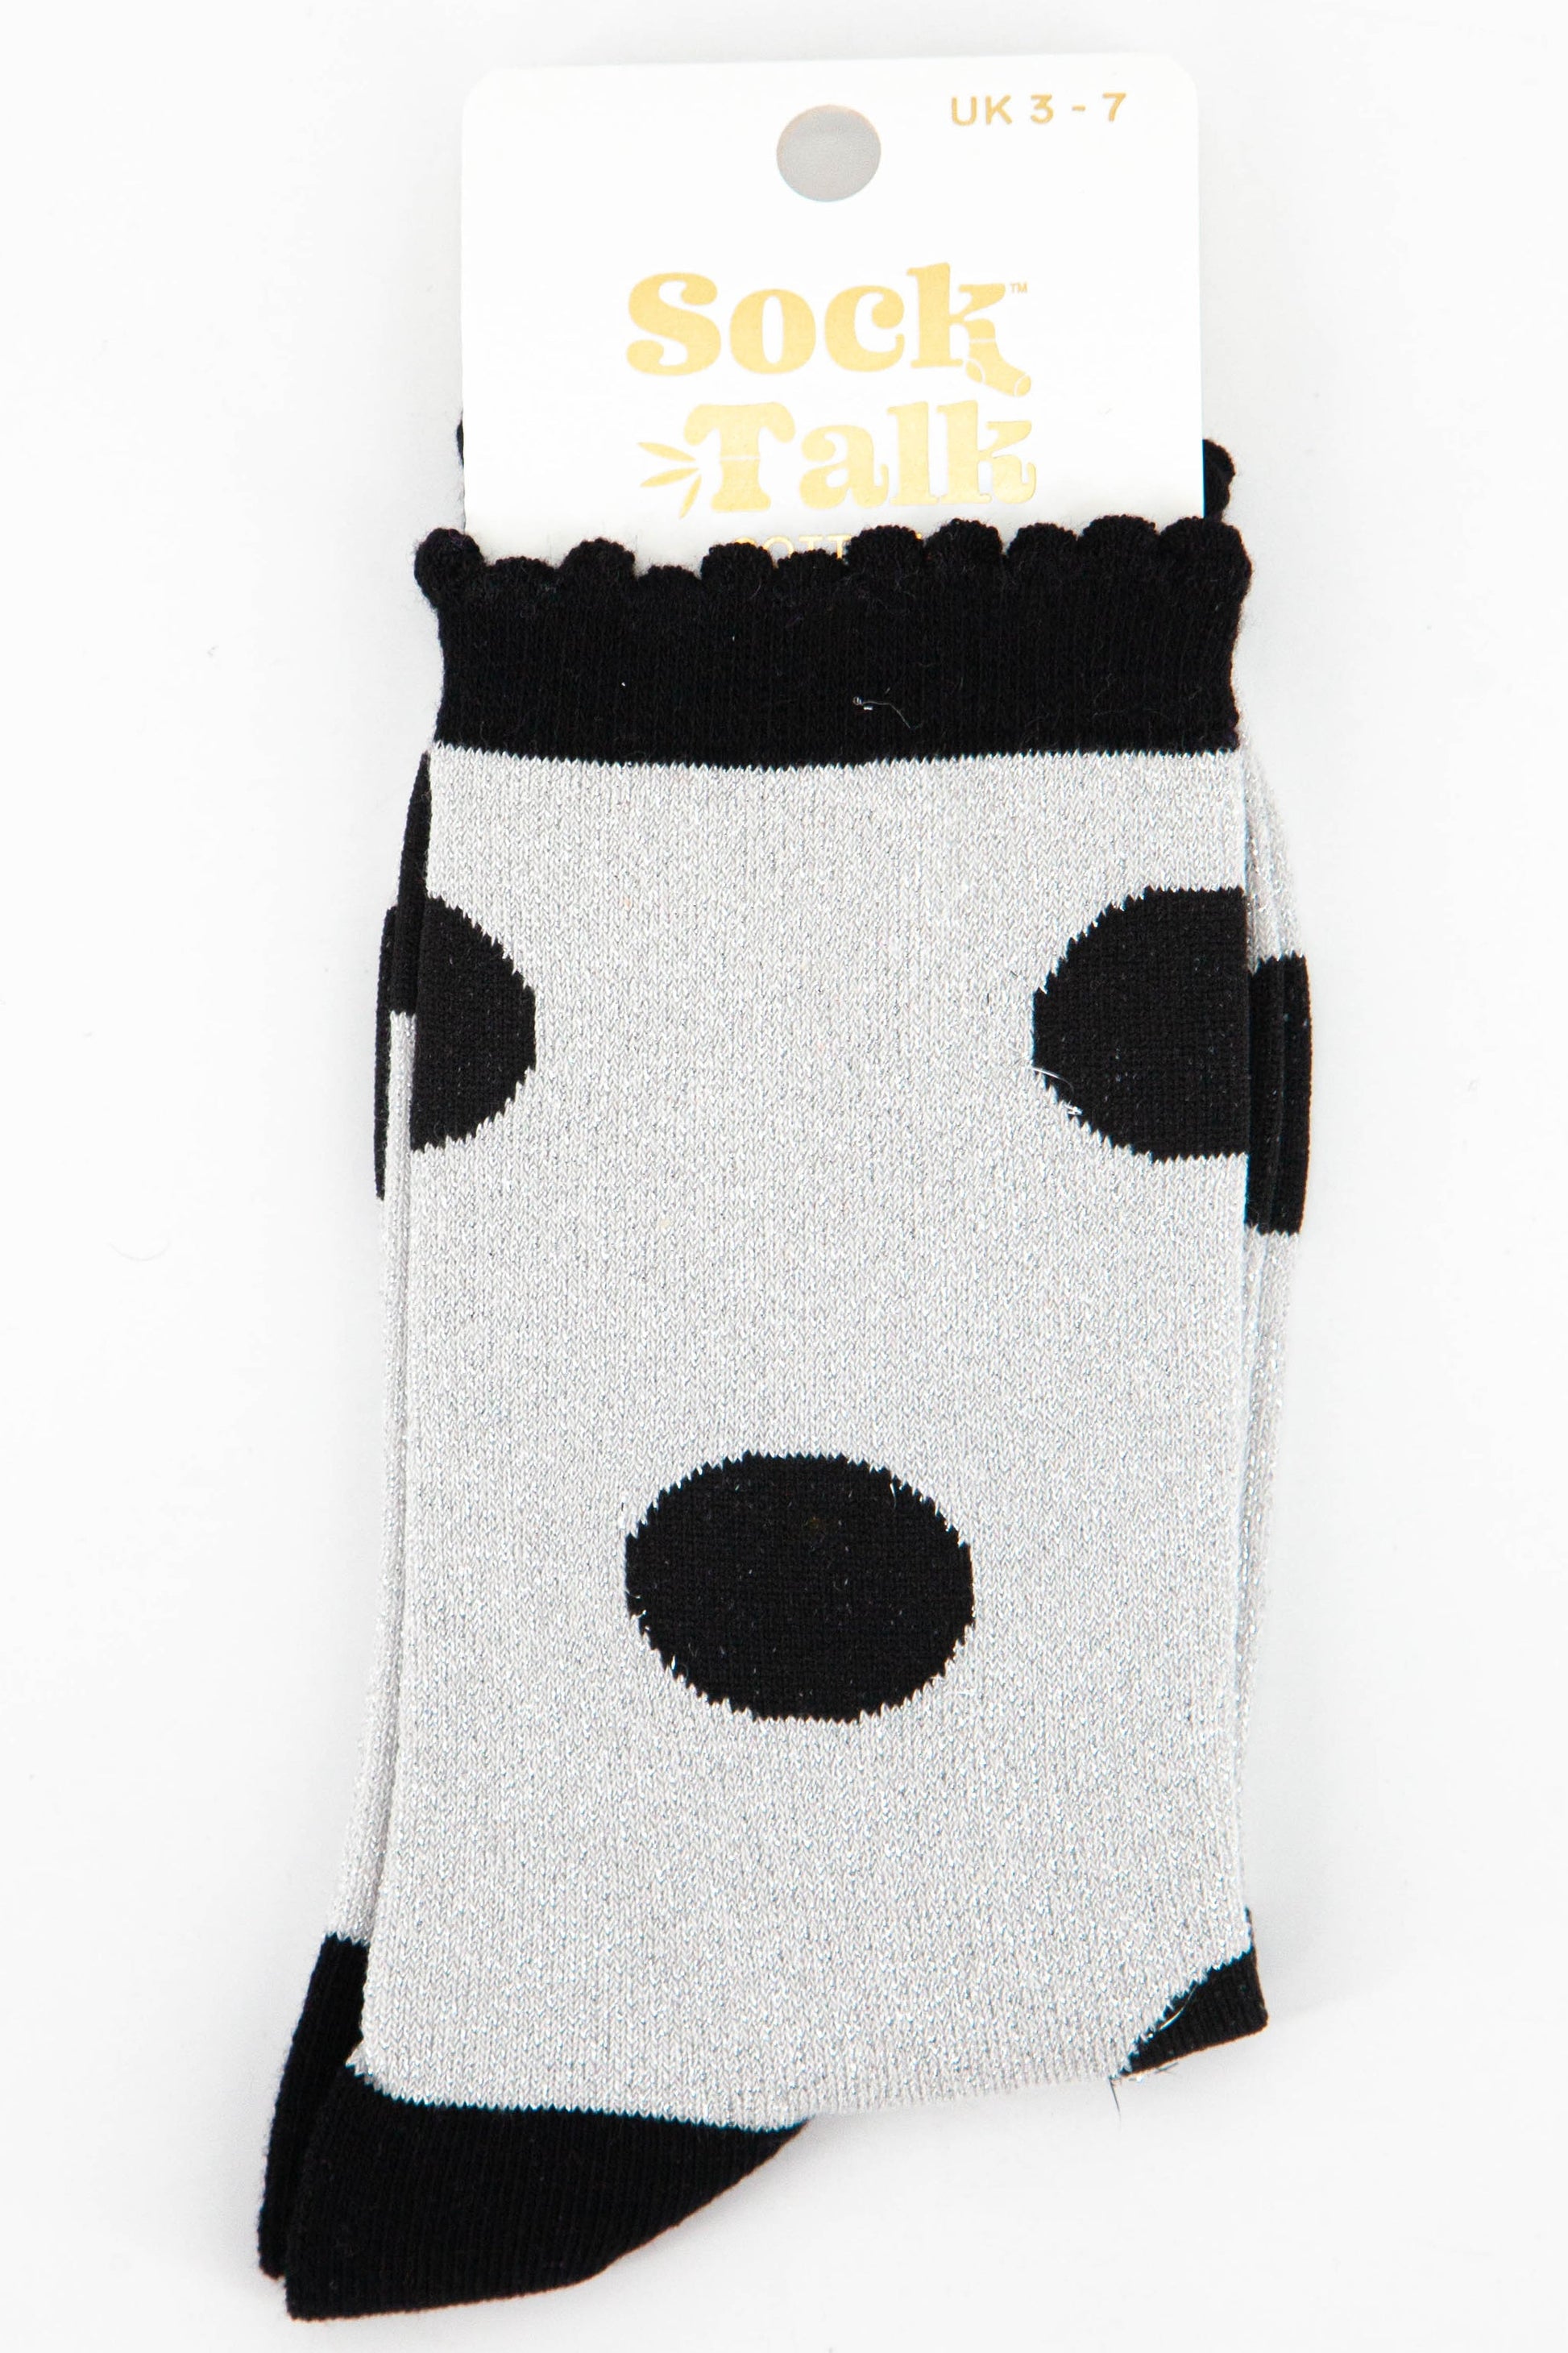 womens light grey and black spot pattern glitter ankle socks uk size 3-7